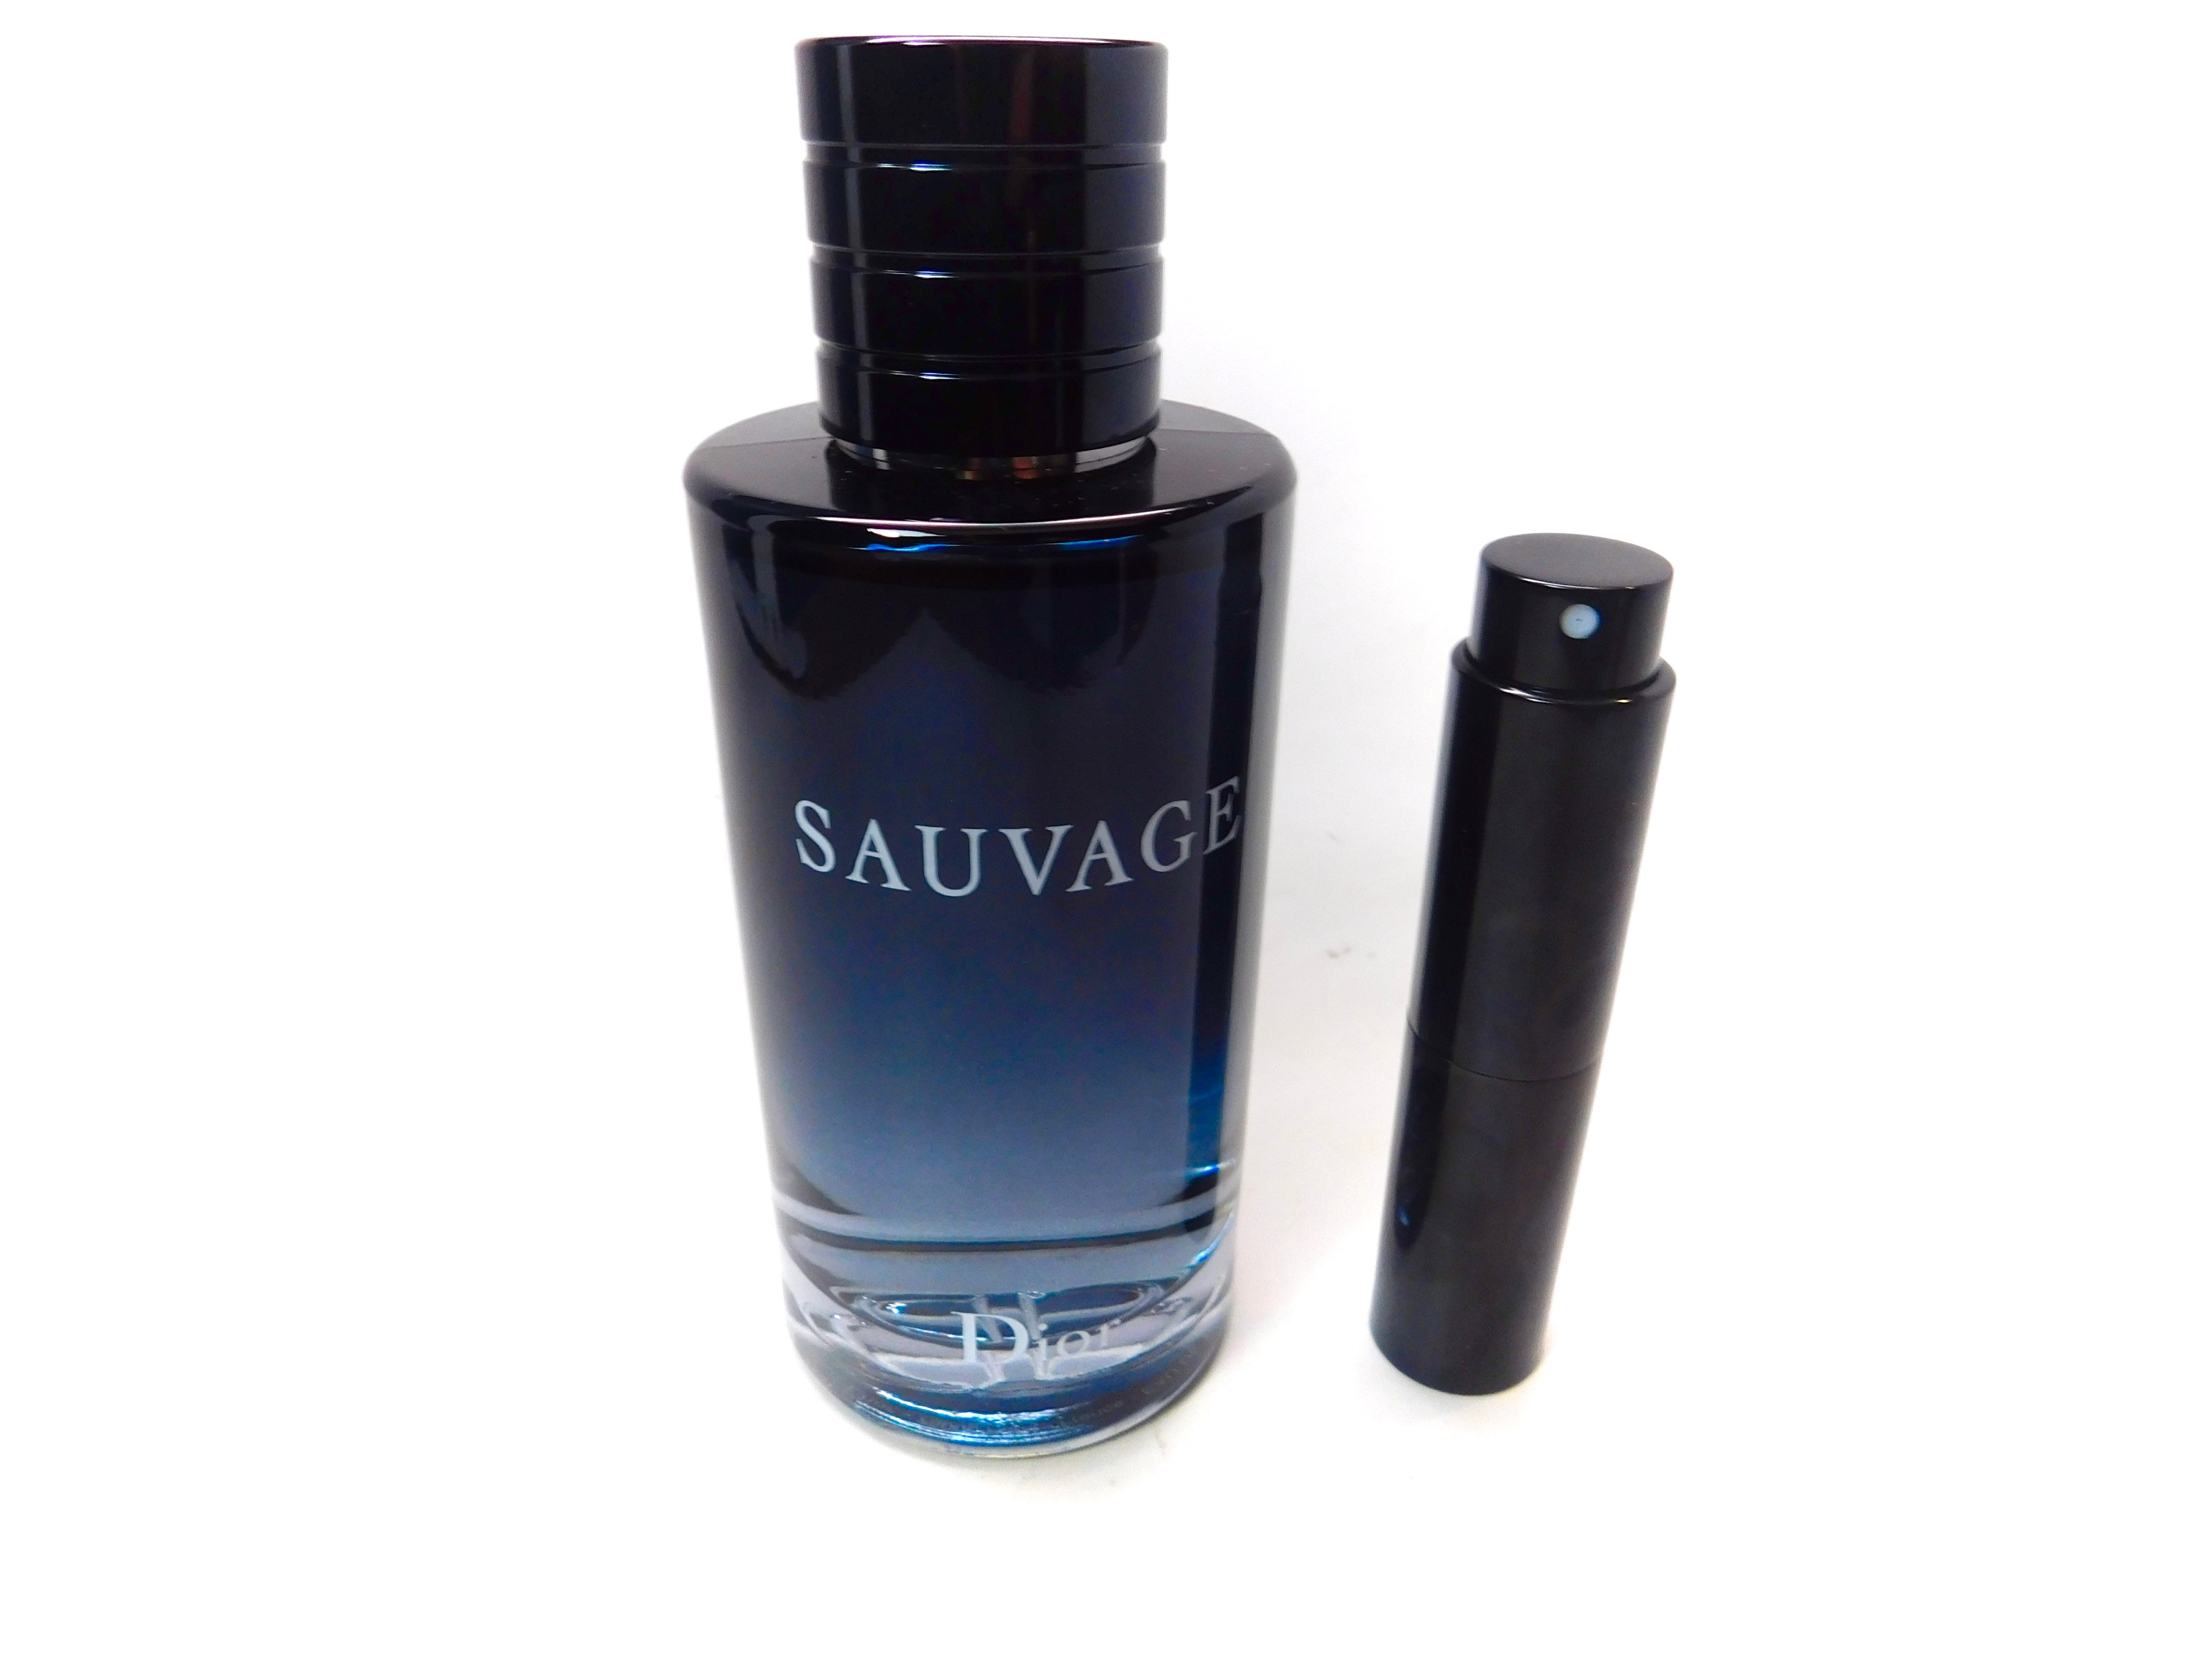 sauvage fragrance